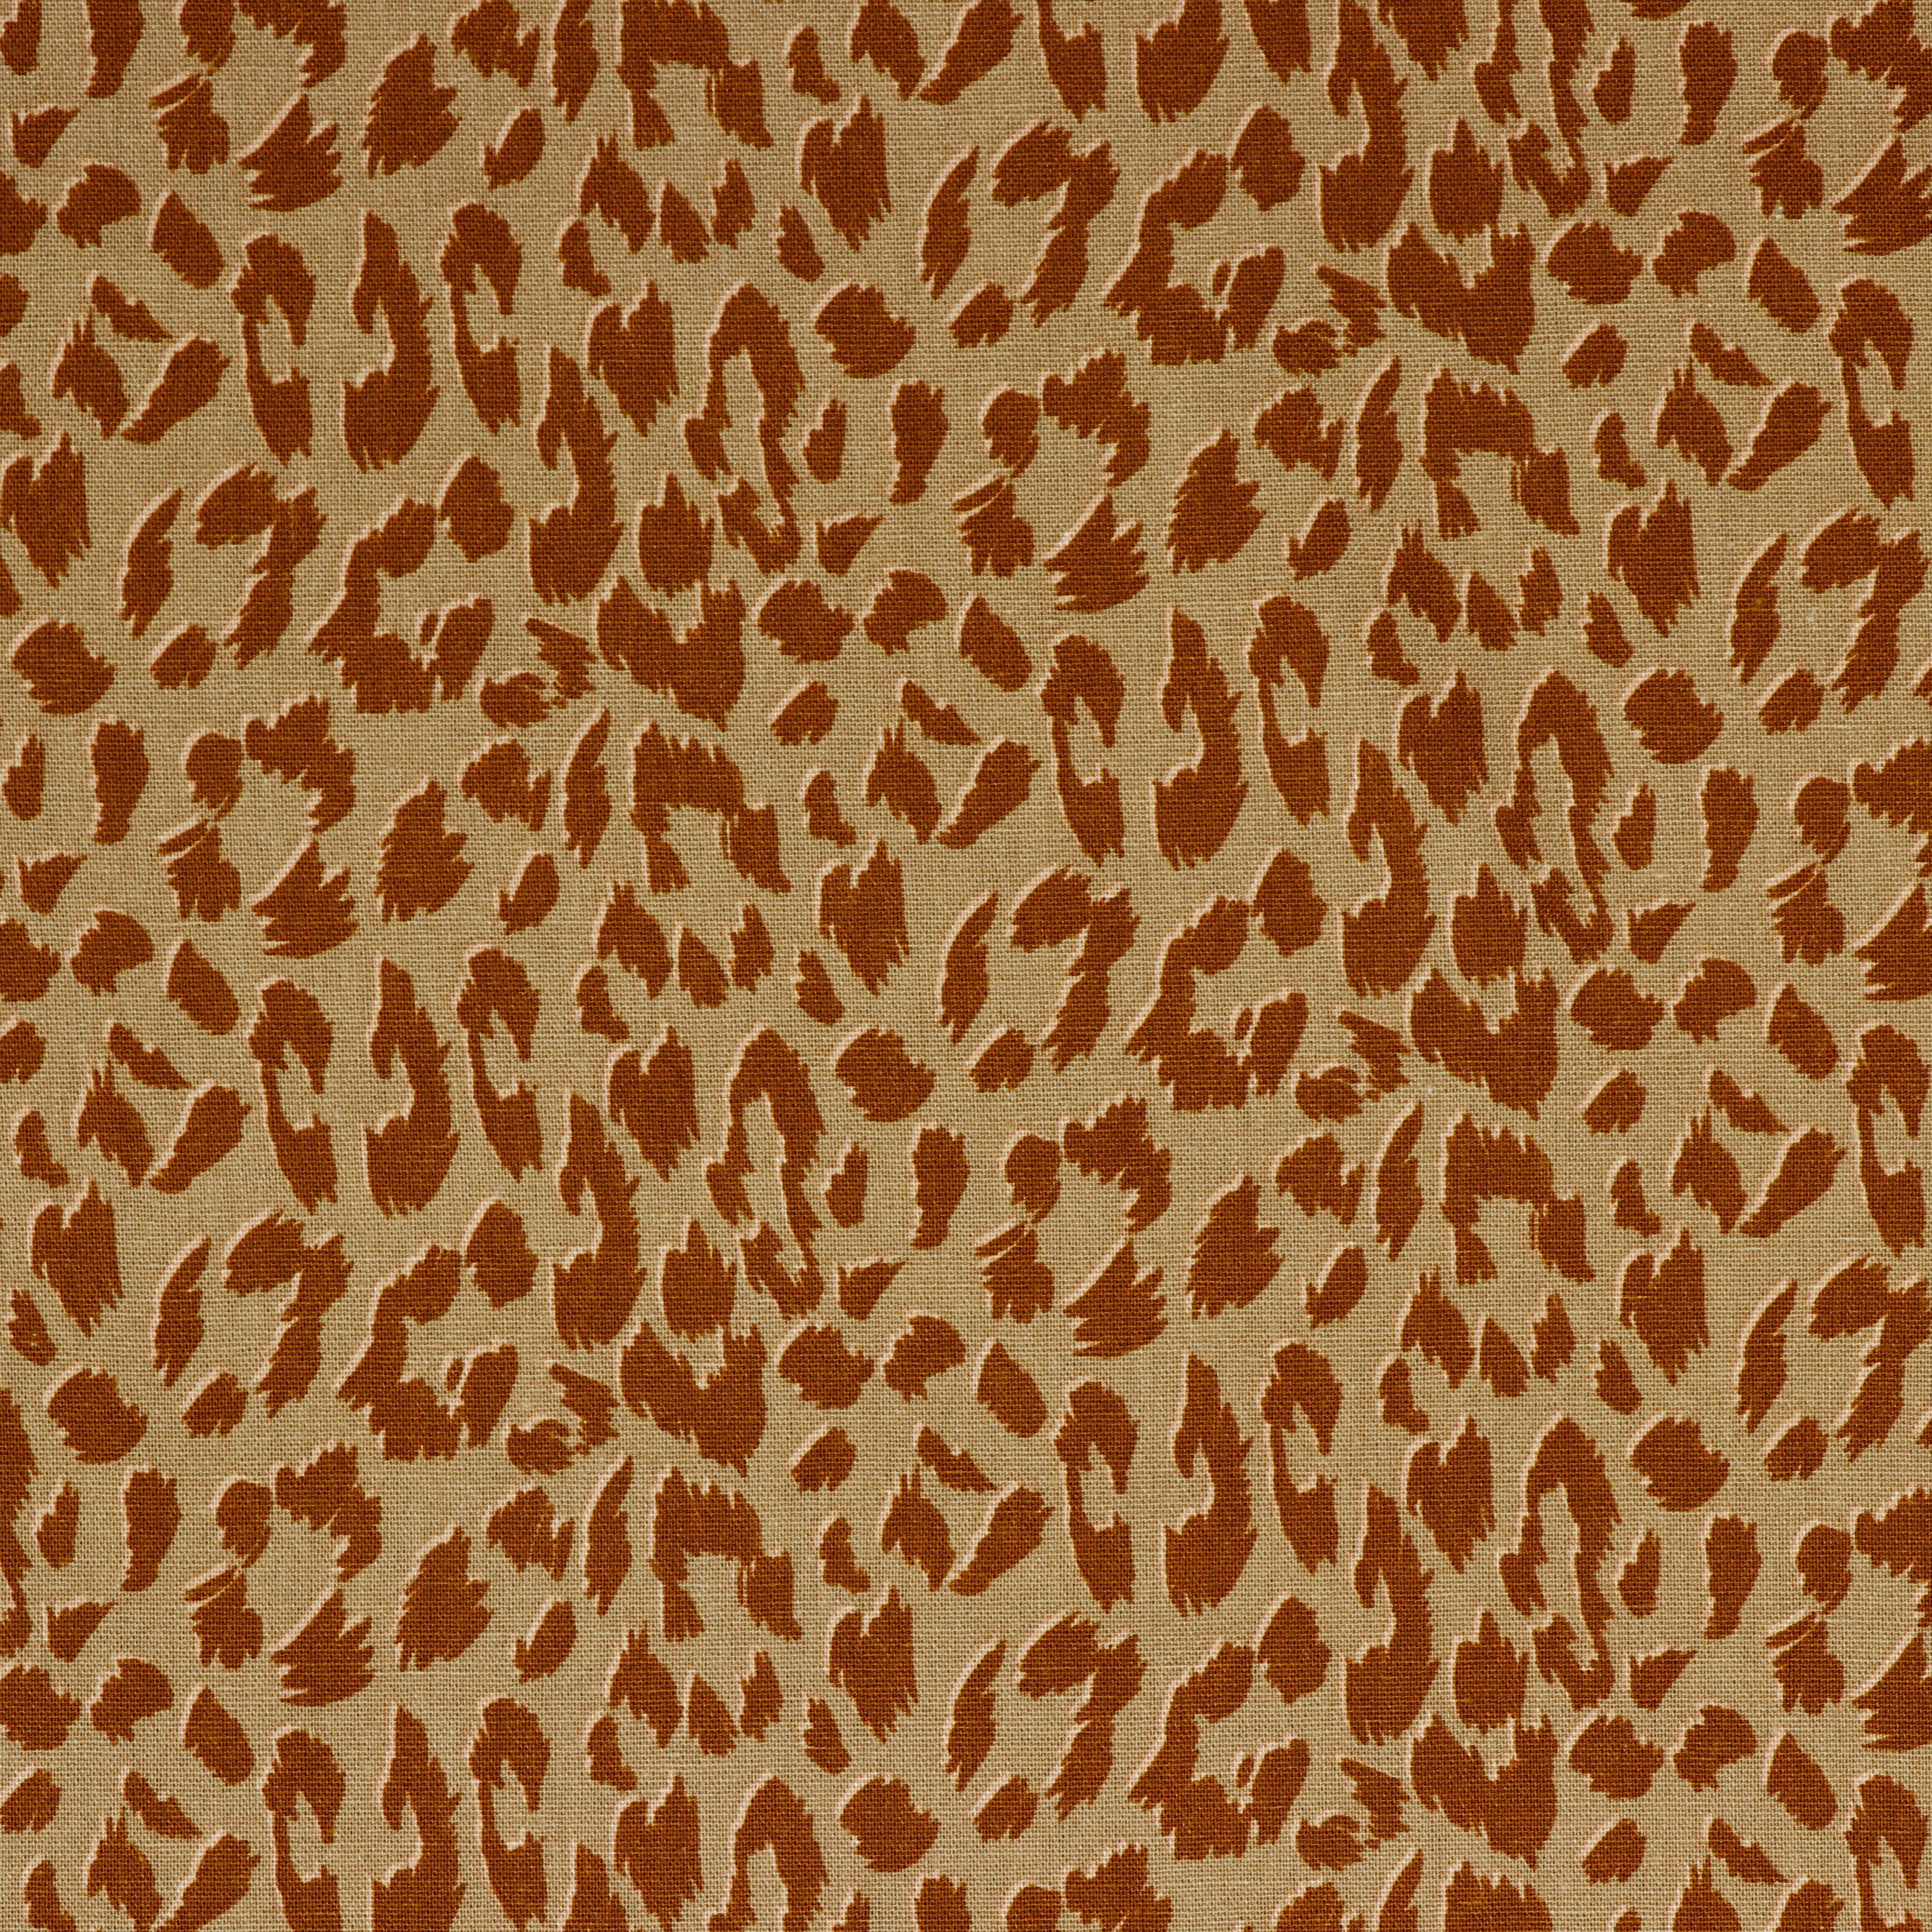 Animal Print on Sand Linen Viscose Blend Fabric